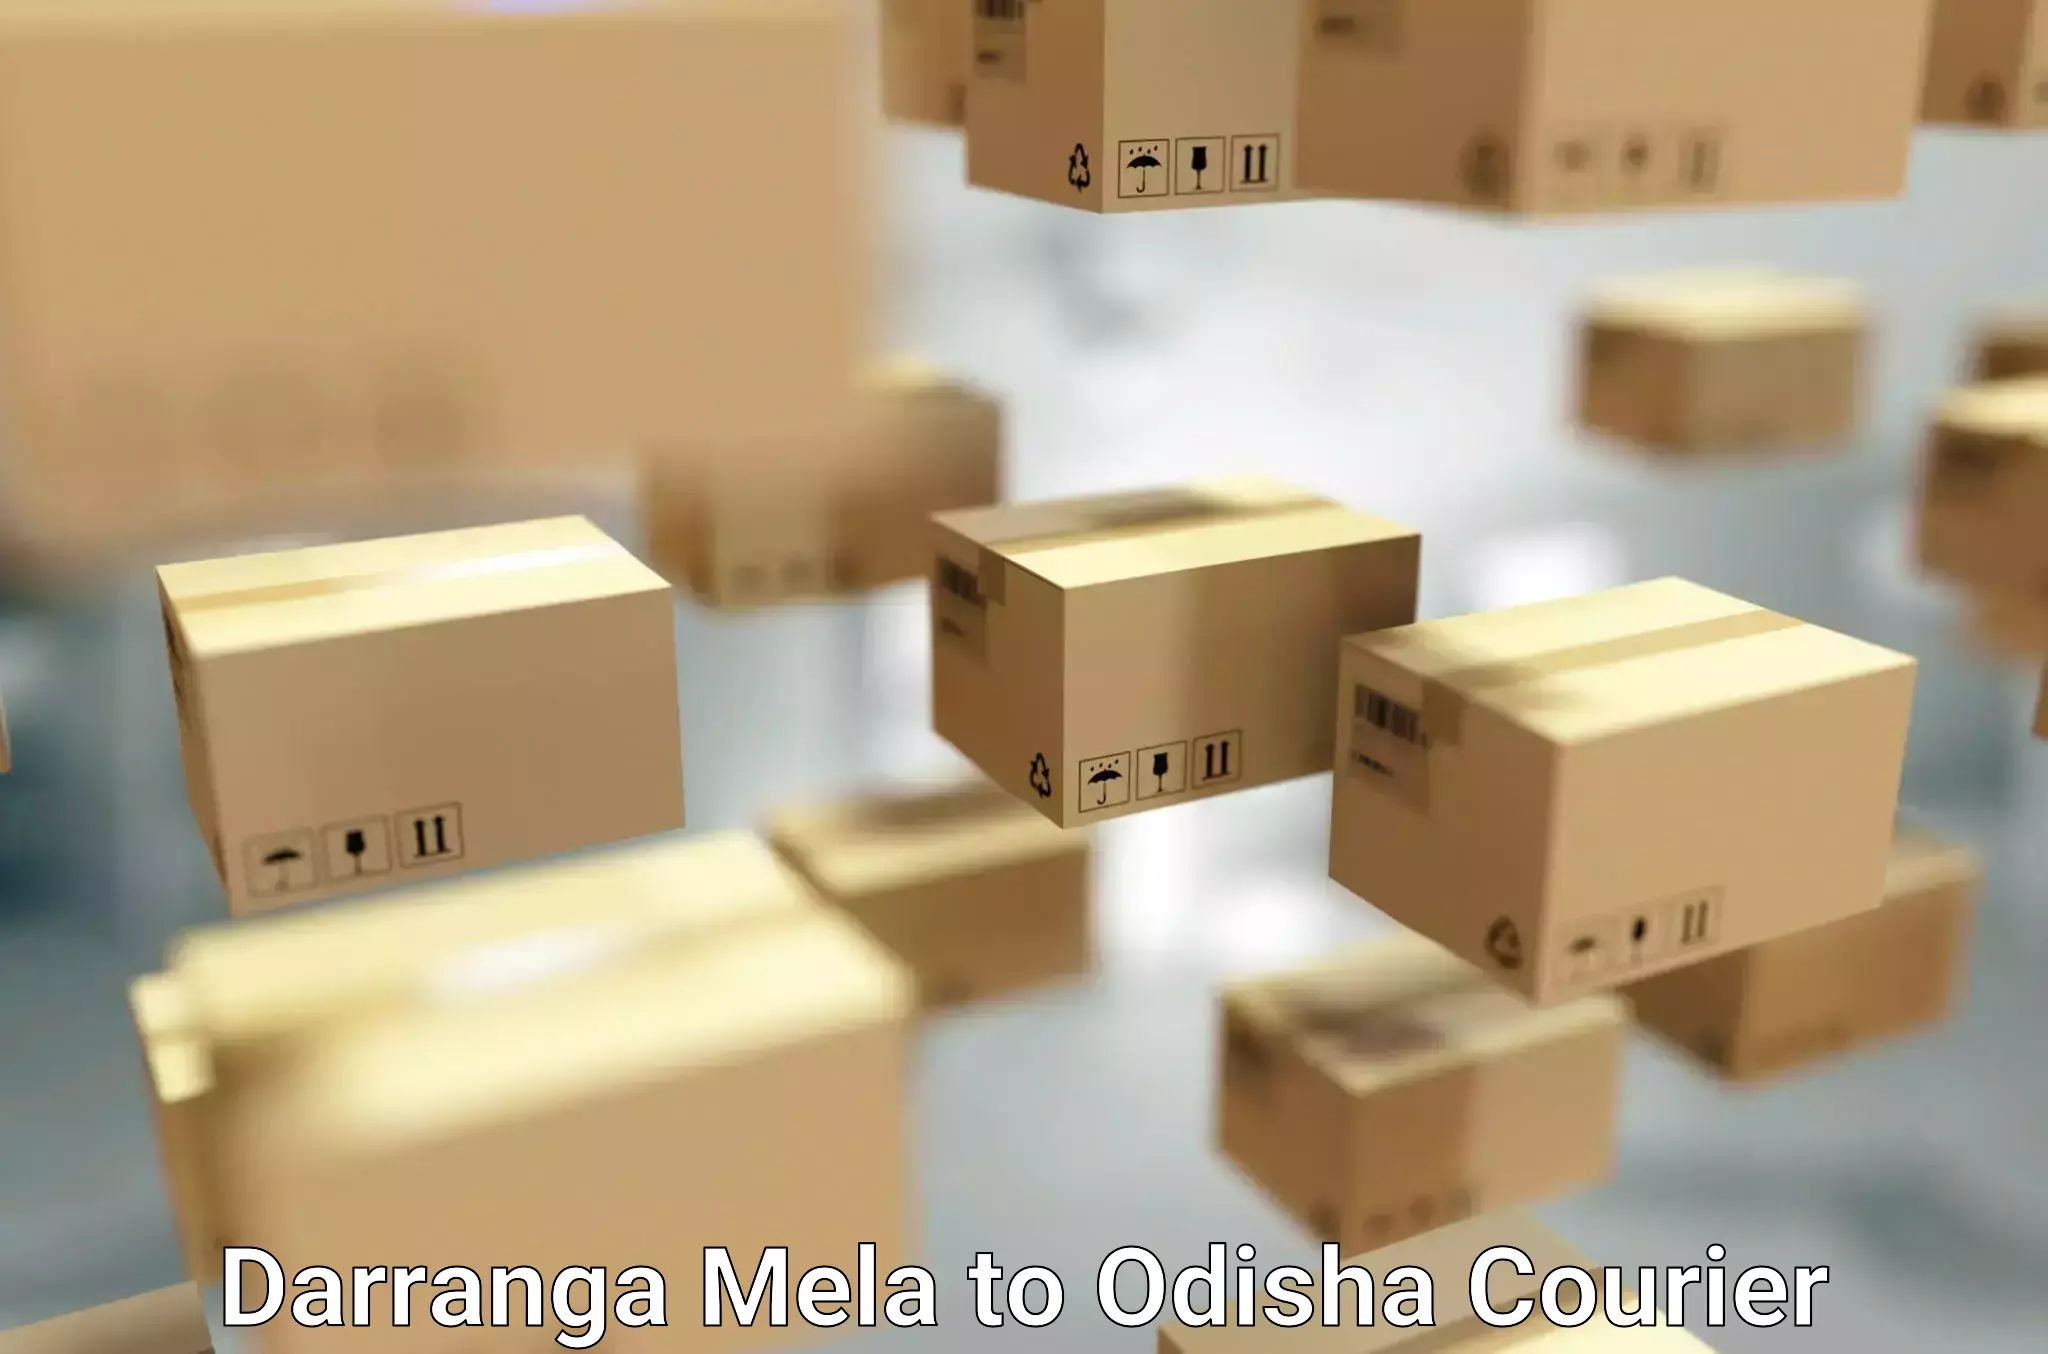 Moving and handling services in Darranga Mela to Odisha